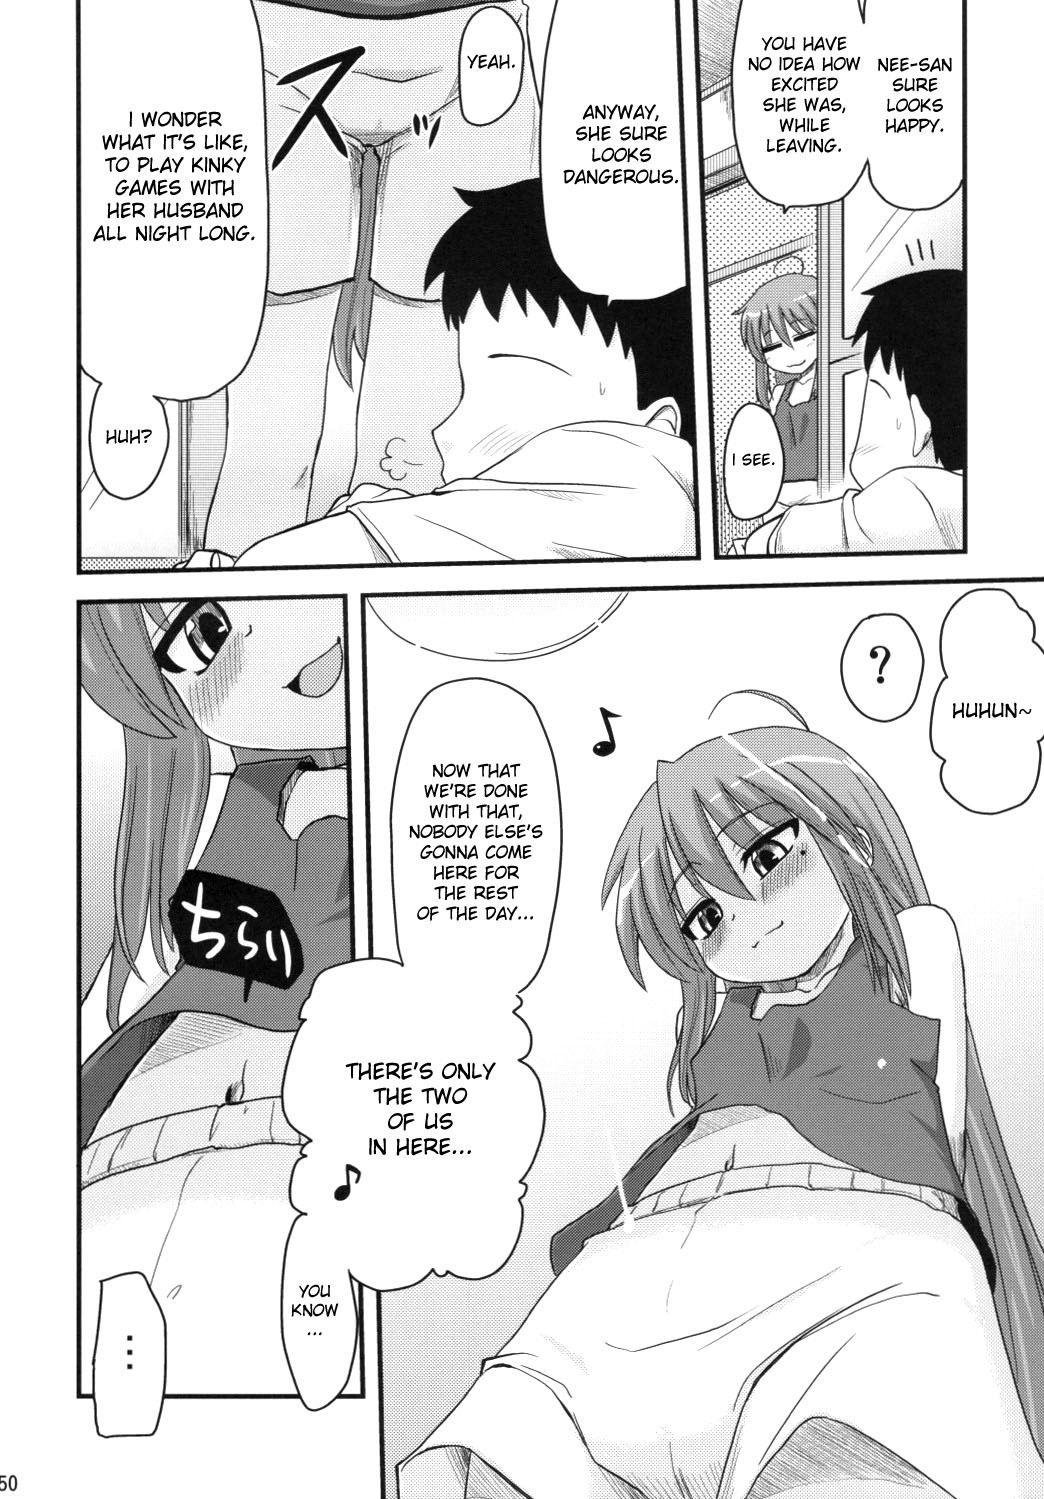 Konata and Oh-zu 4 people each and every one + 1 hentai manga picture 46